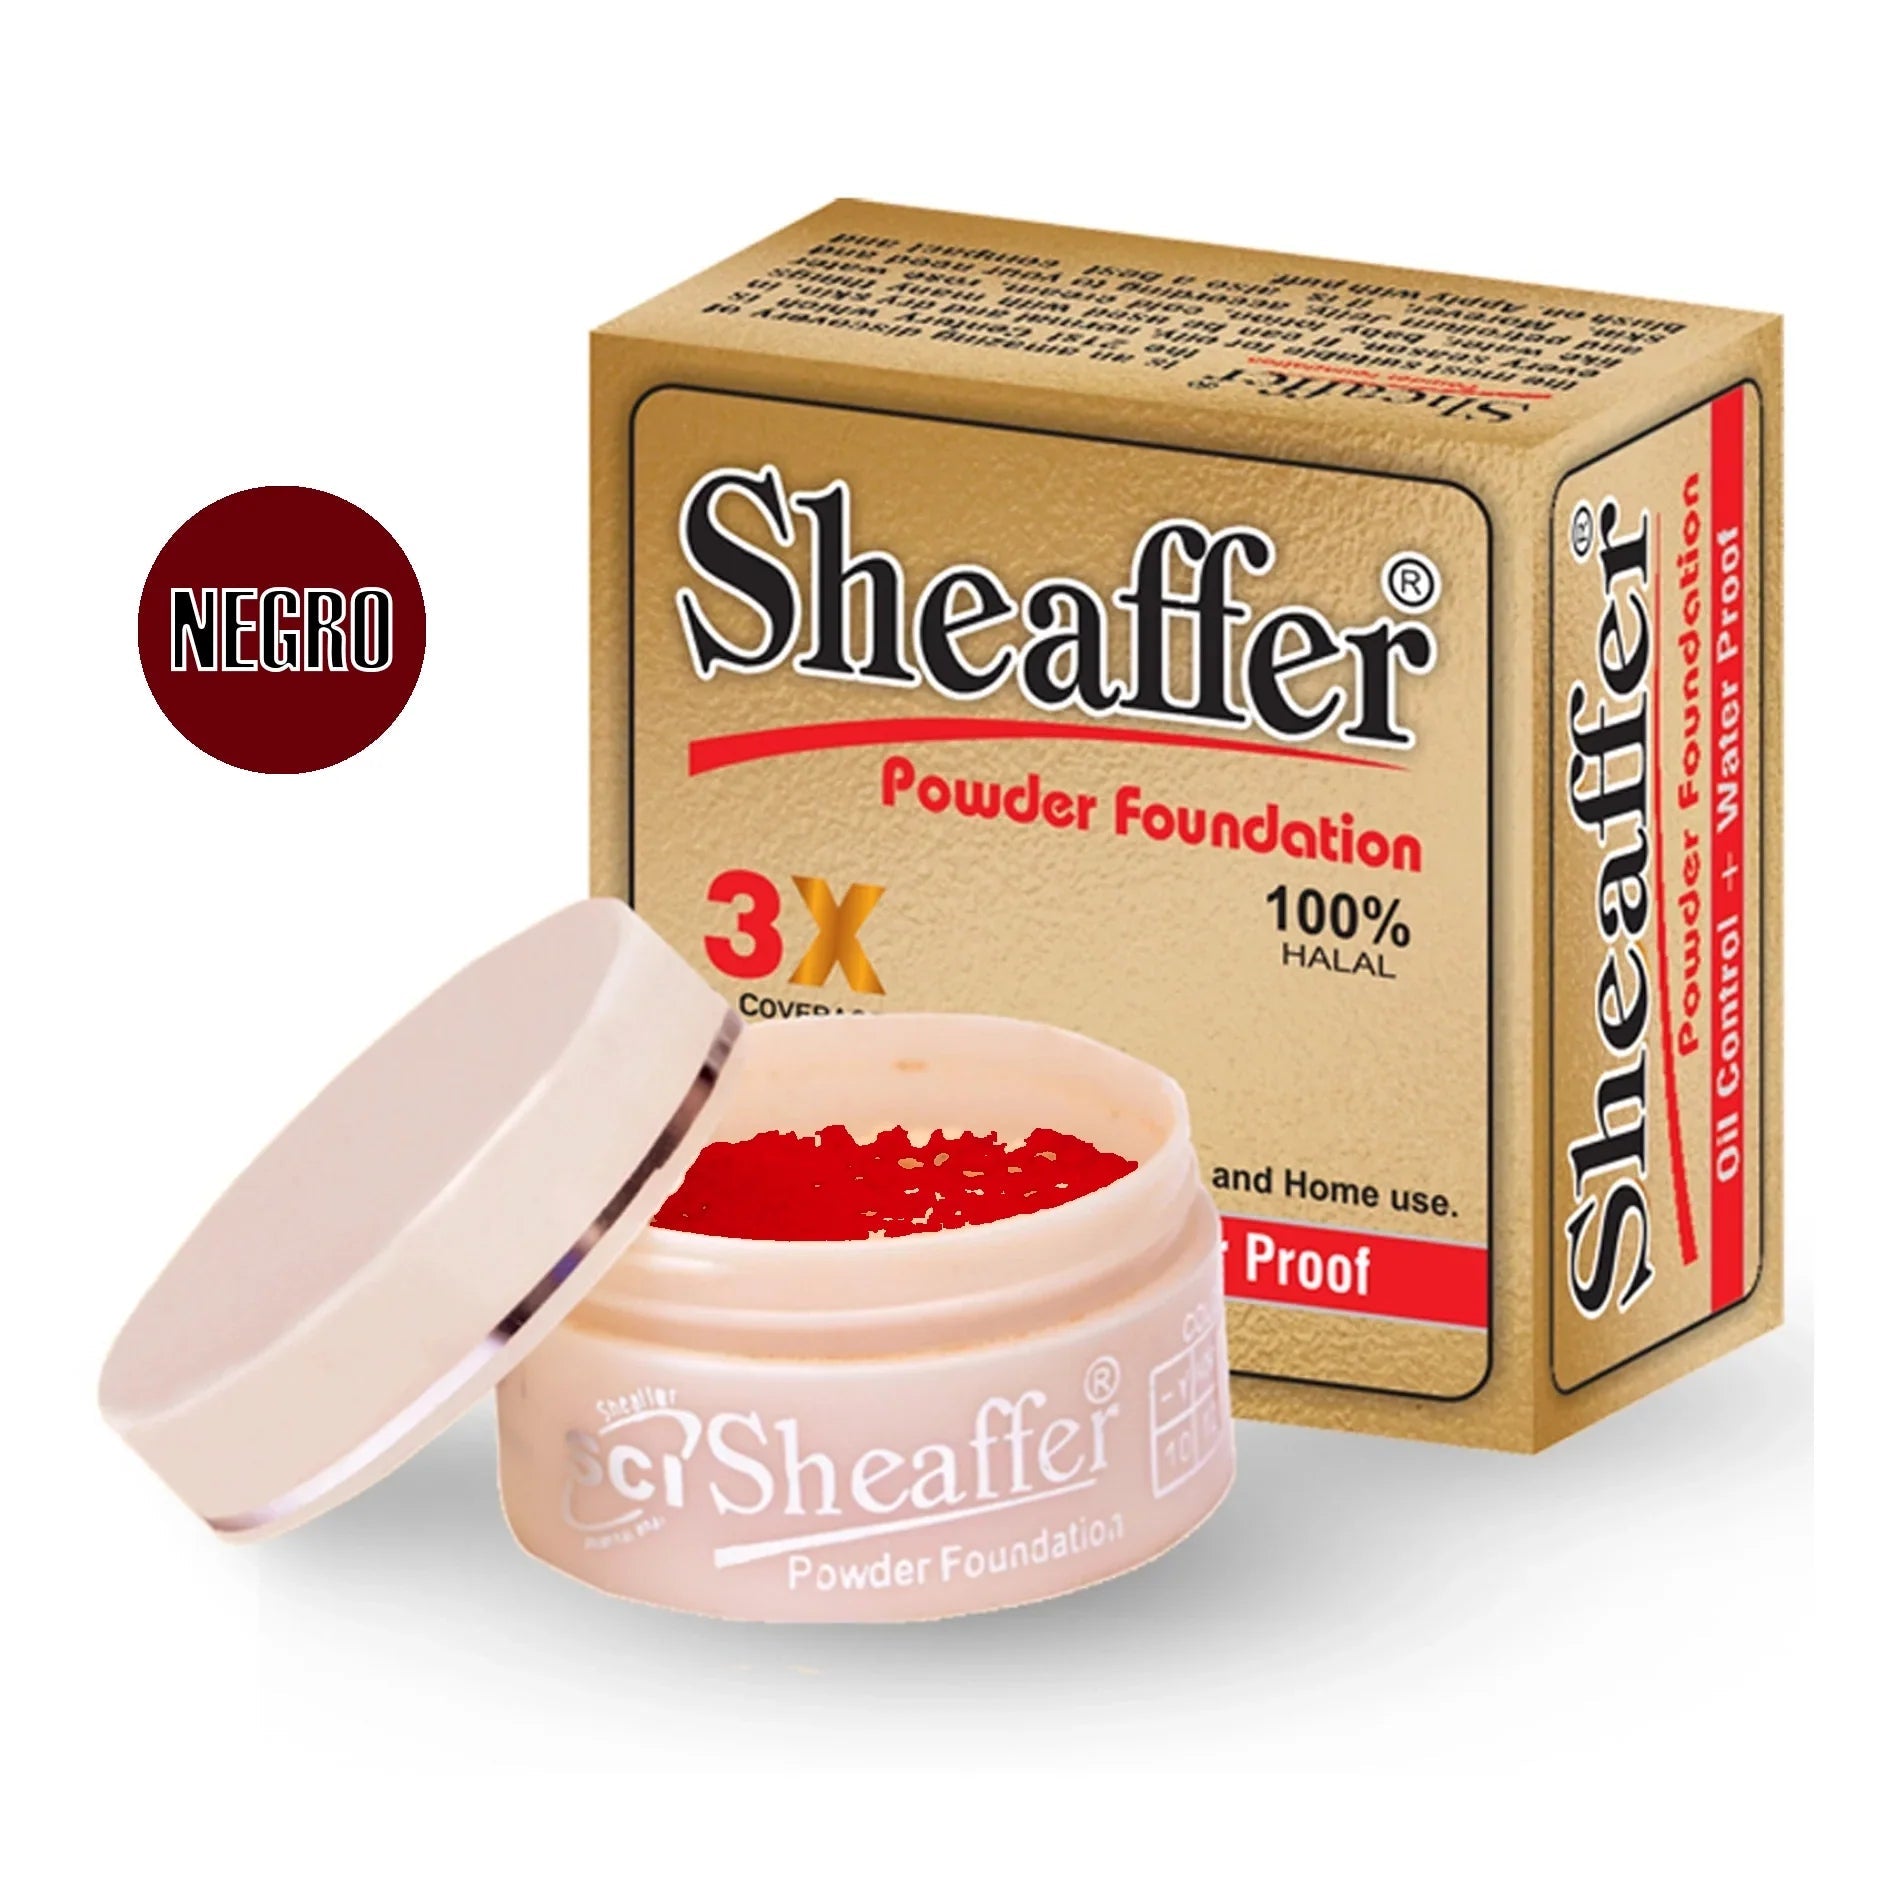 Sheaffer Powder Foundation Base 10 Shade - Retailershop - Online Shopping Center